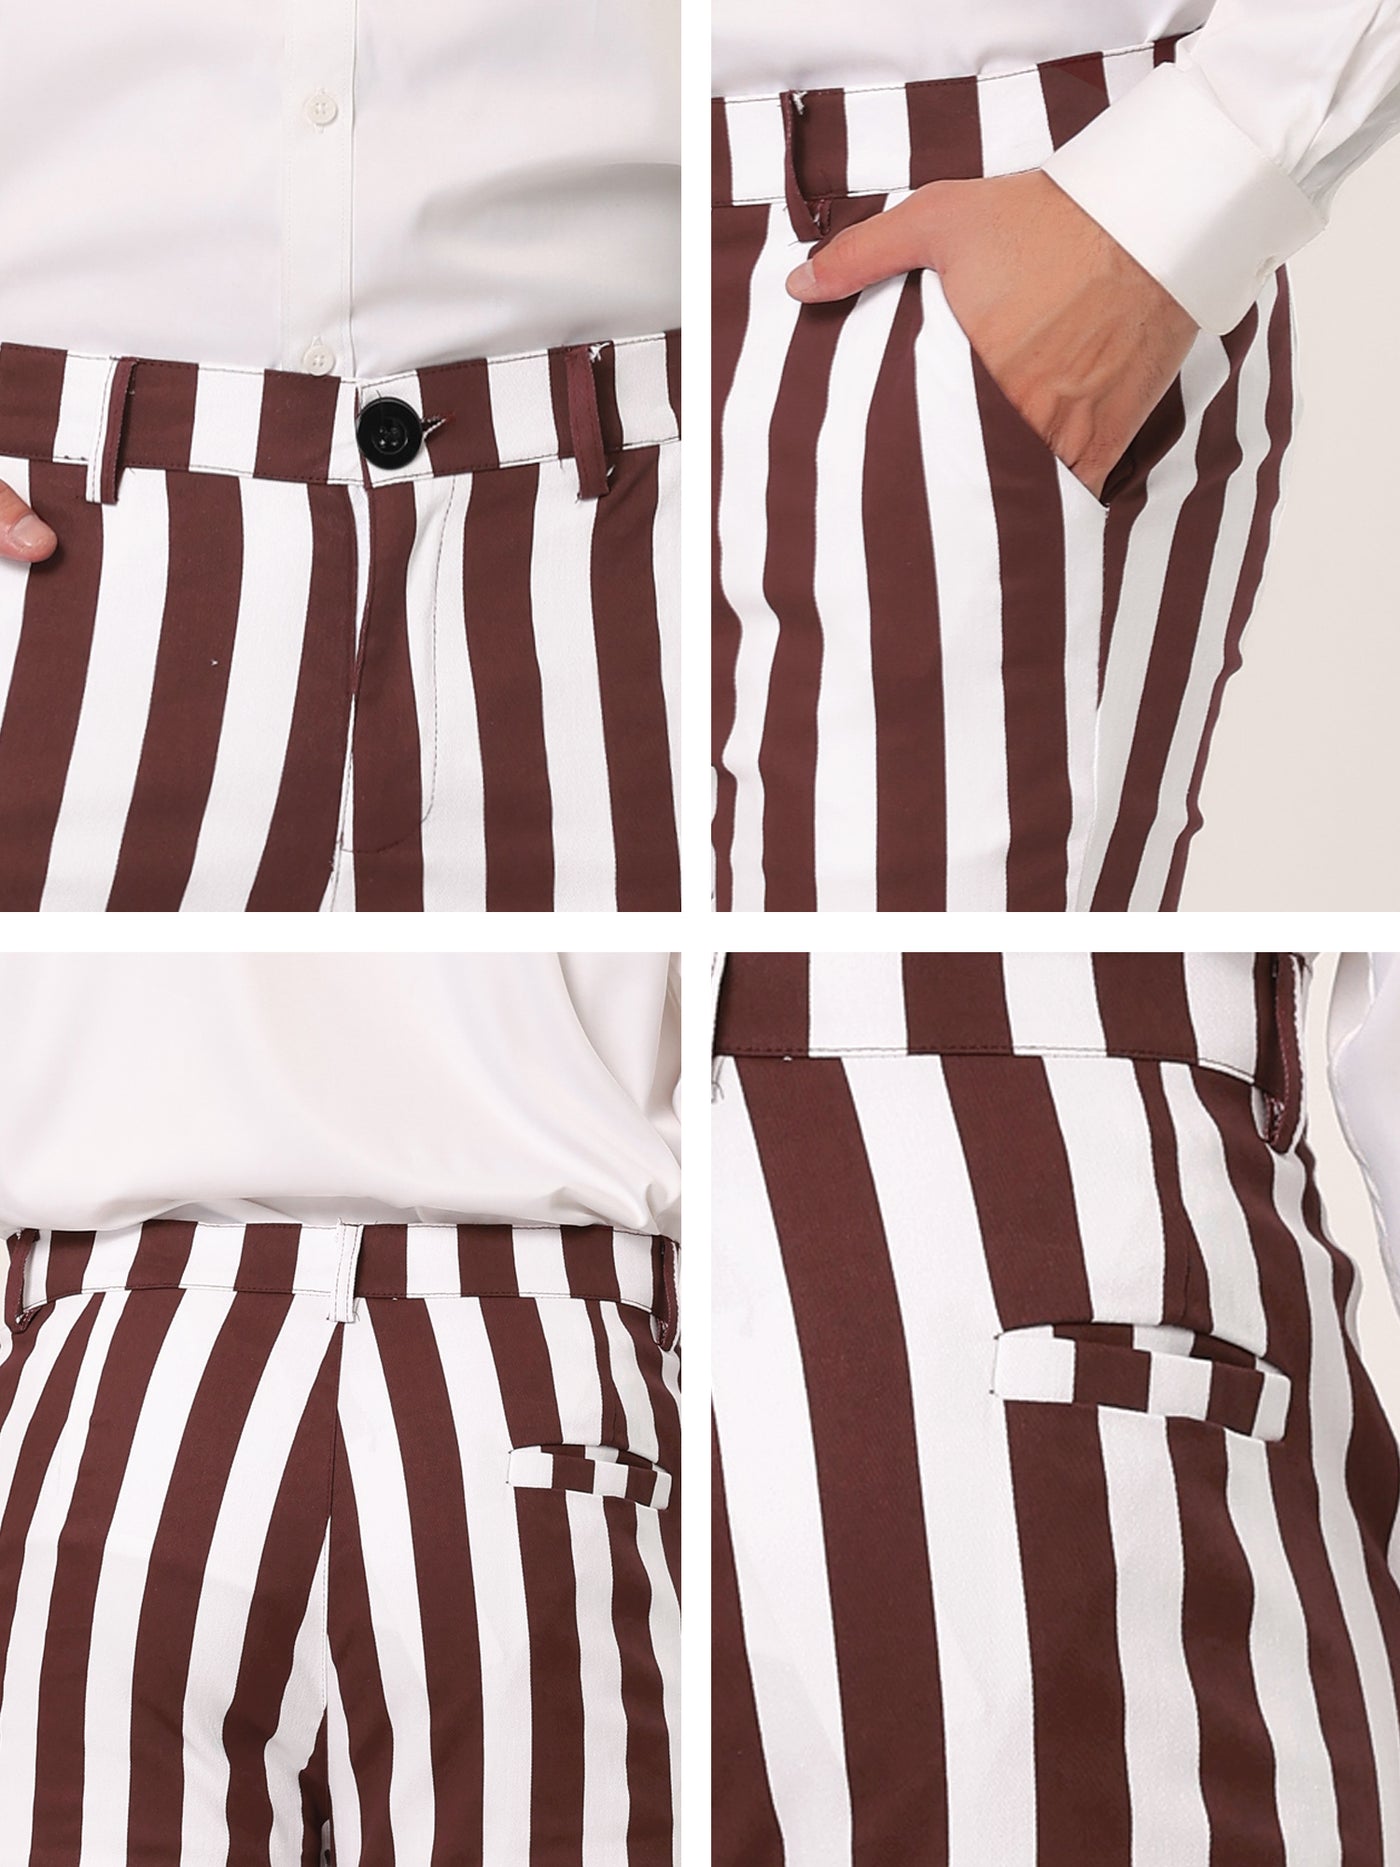 Bublédon Casual Skinny Color Block Pencil Dress Striped Pants